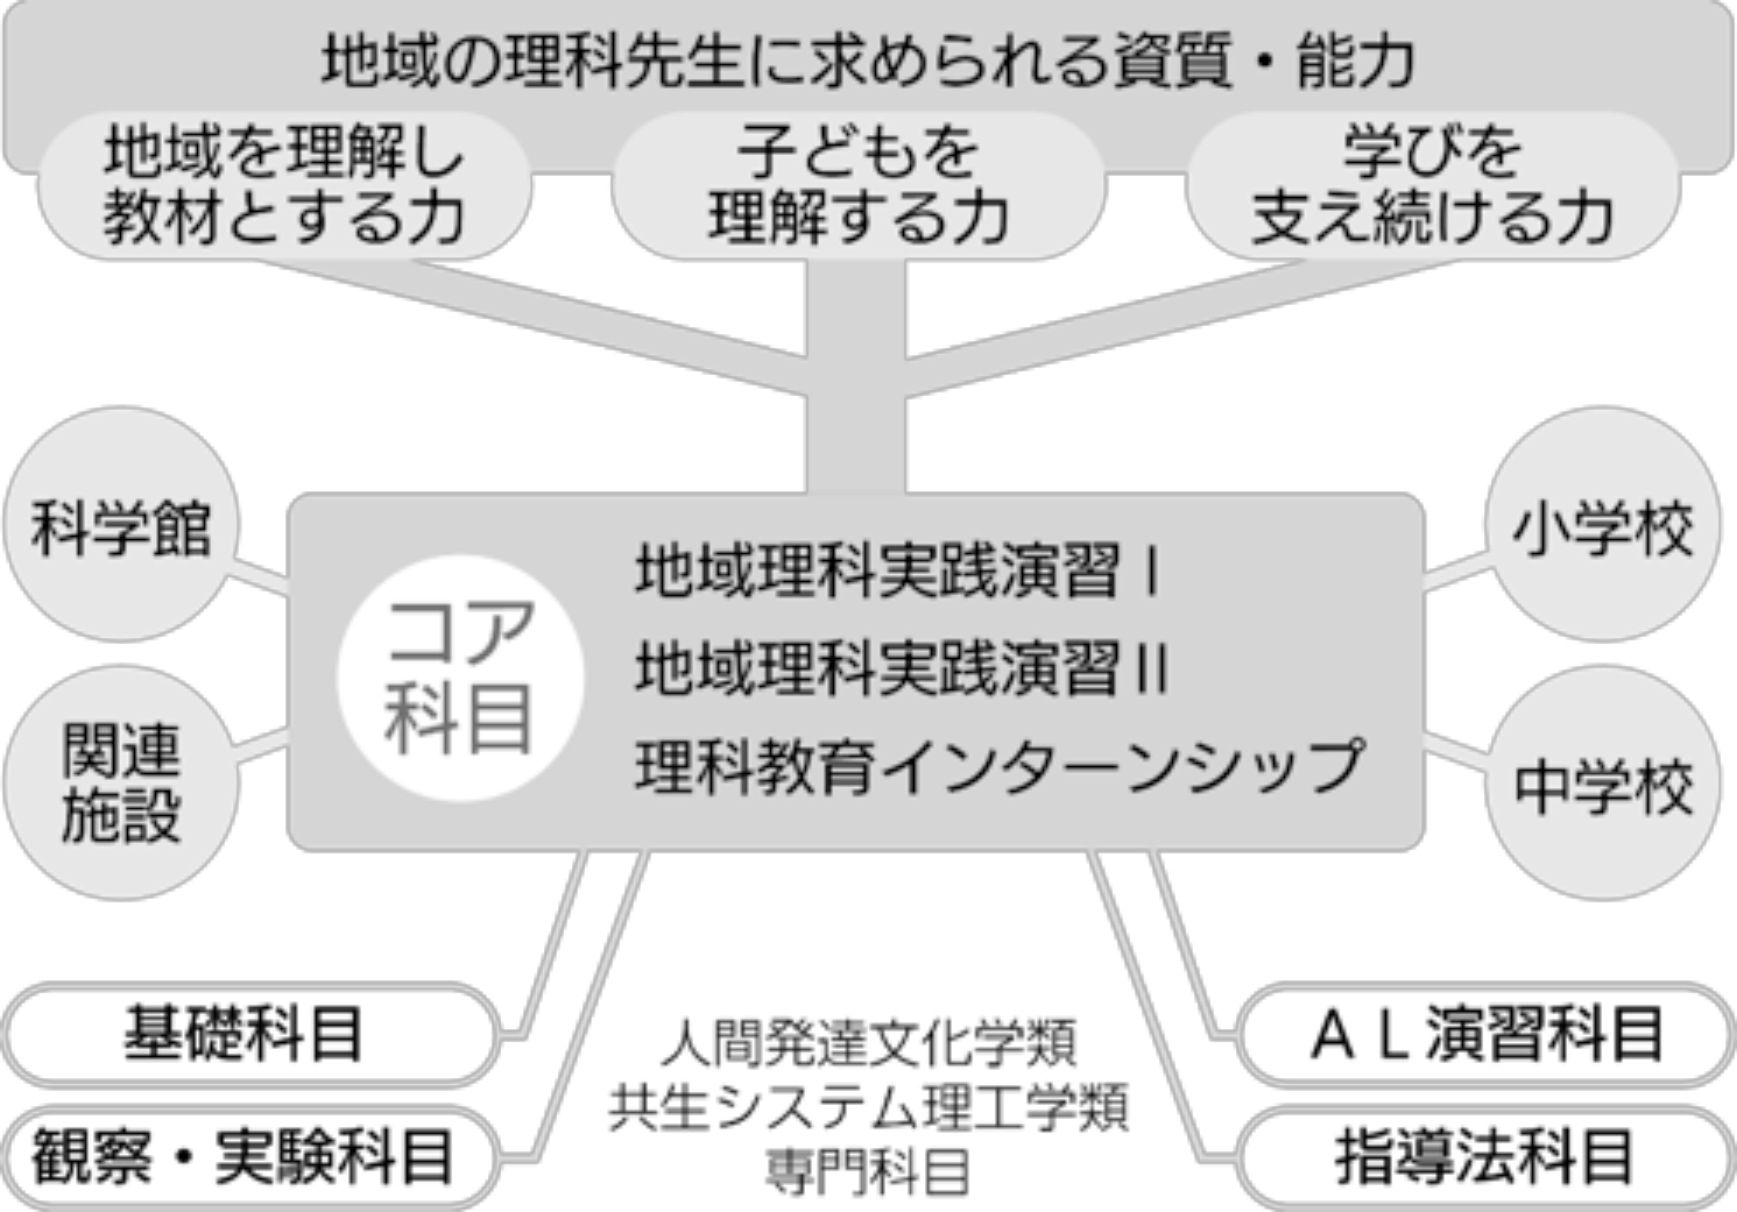 http://kyoumu.adb.fukushima-u.ac.jp/guide/2019/hdc/Files/2019/03/%E5%9C%B0%E5%9F%9F%E3%81%A8%E5%AD%A6%E3%81%B5%E3%82%99%E6%9C%AA%E6%9D%A5%E3%81%AE%E7%90%86%E7%A7%91%E5%85%88%E7%94%9F%E7%89%B9%E4%BF%AE%E3%83%95%E3%82%9A%E3%83%AD%E3%82%AF%E3%82%99%E3%83%A9%E3%83%A0_1.jpg